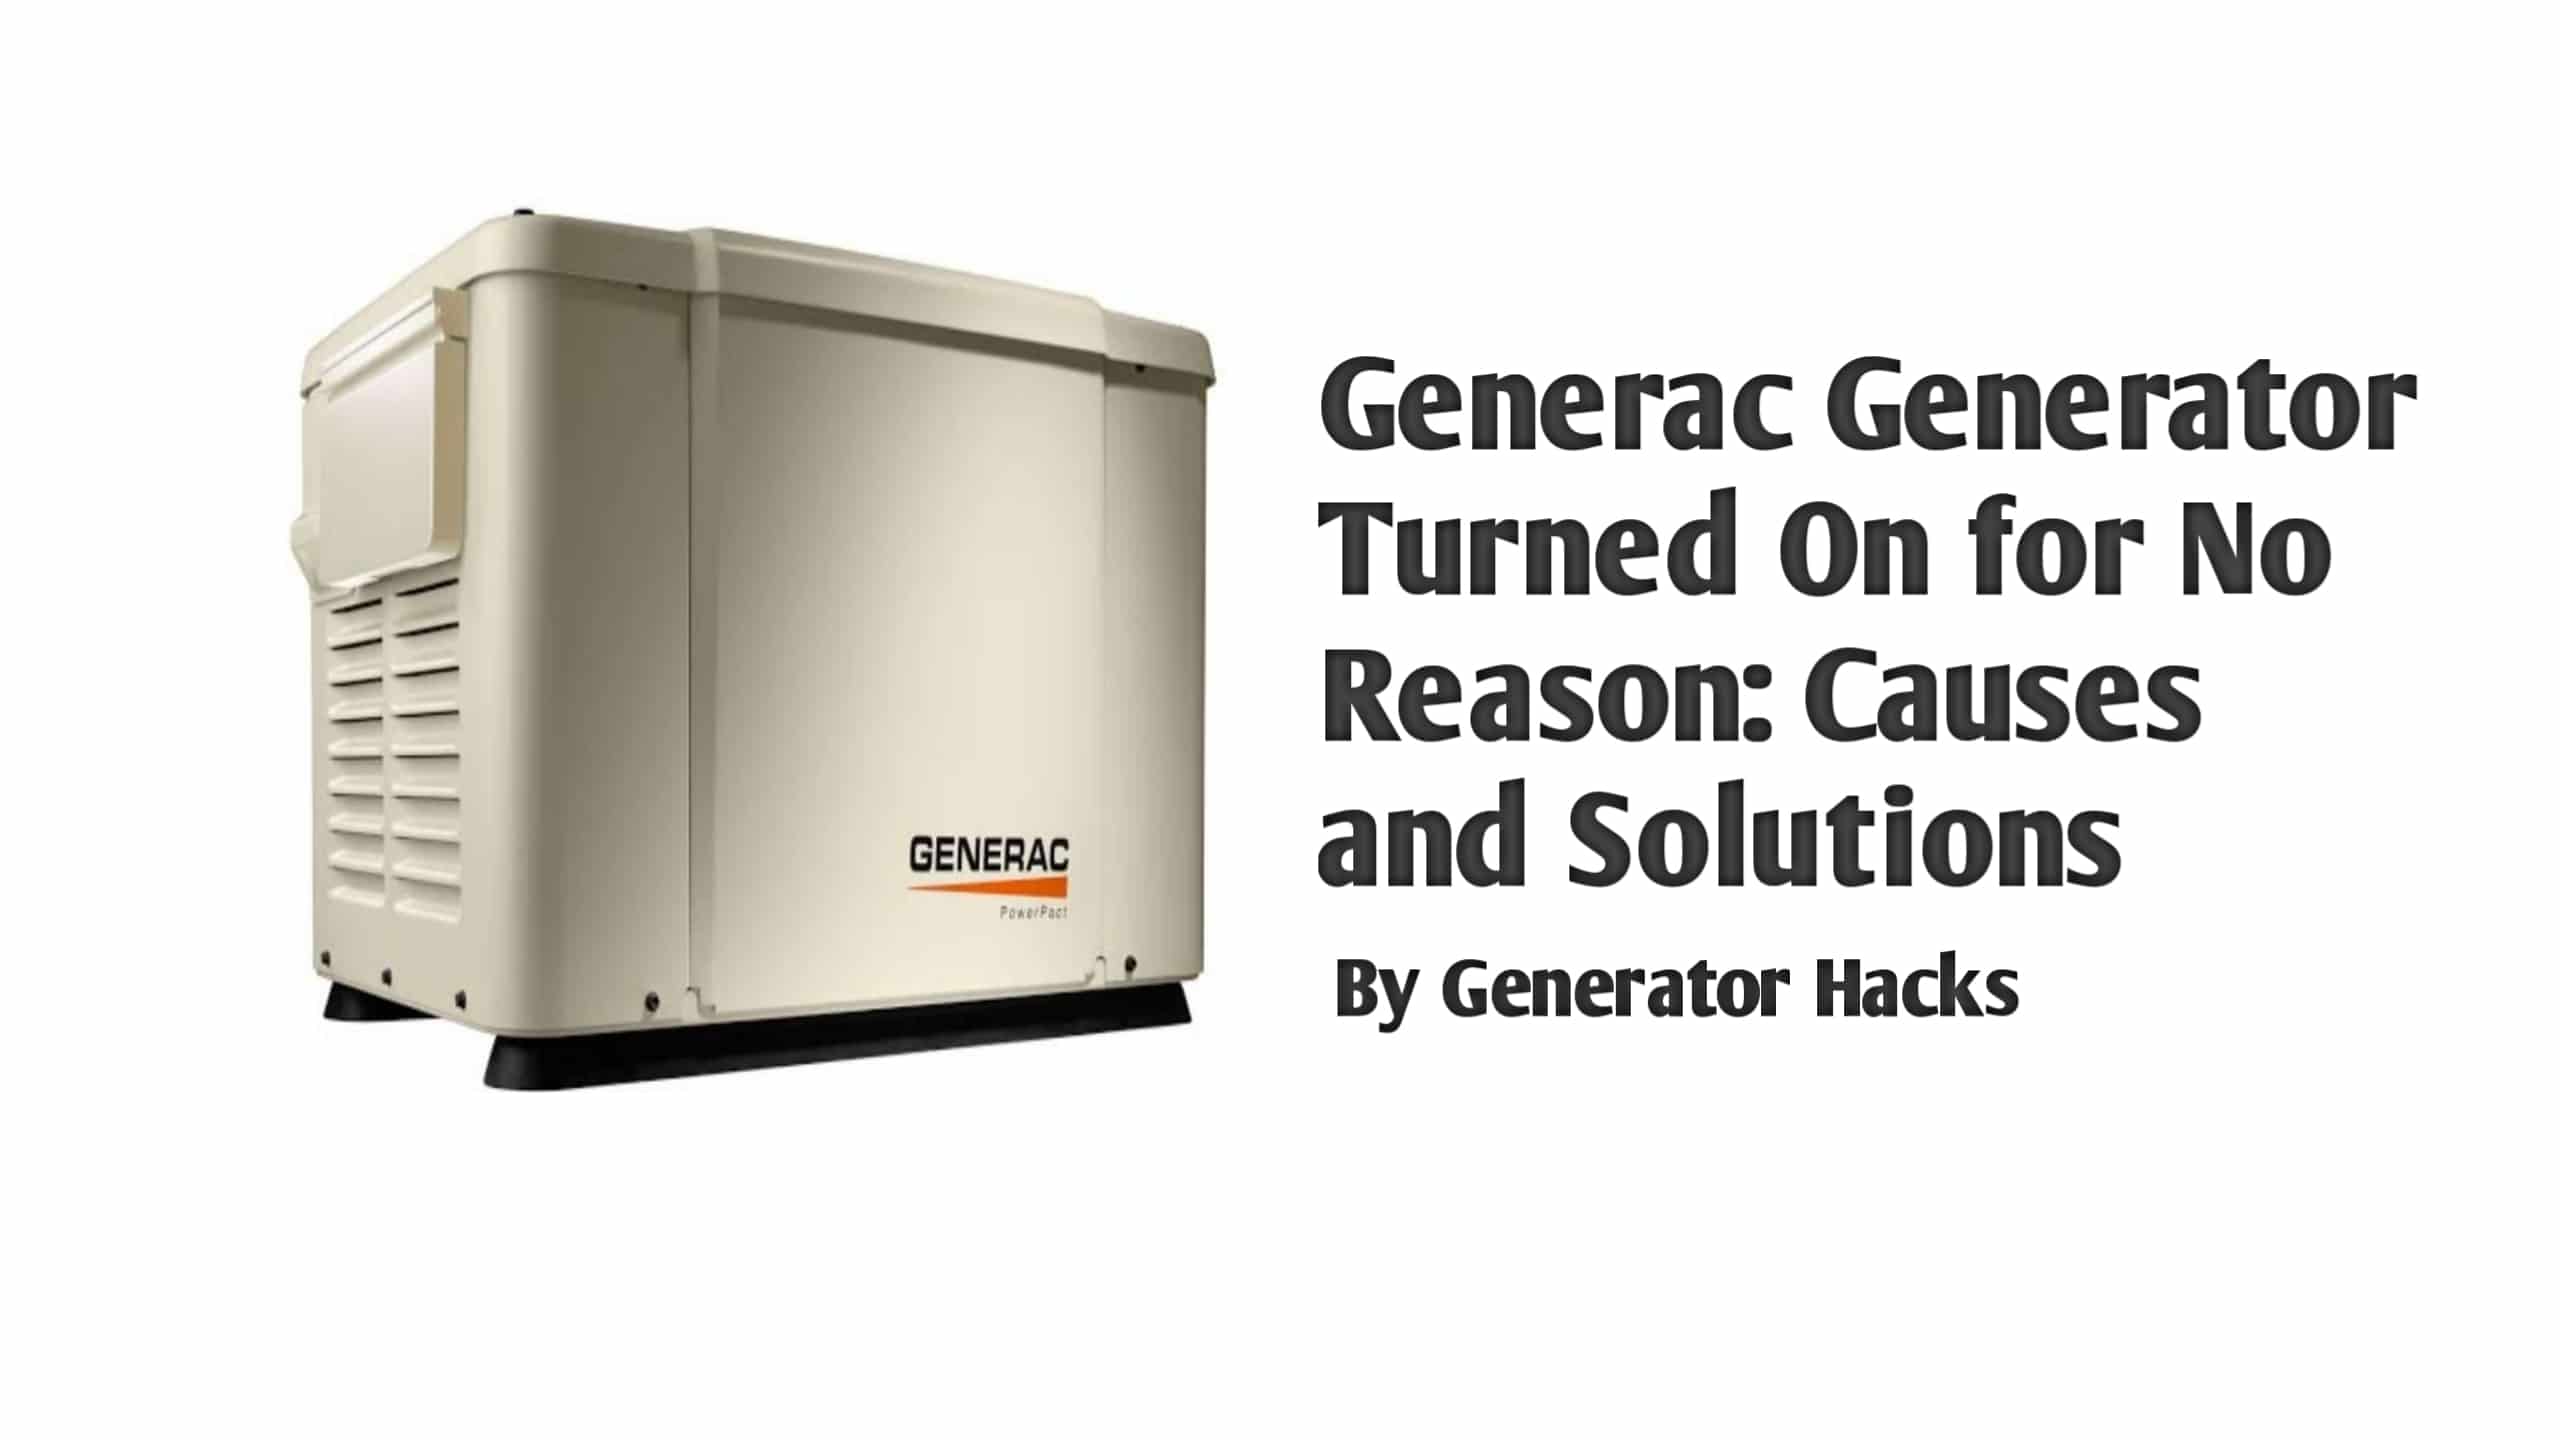 Generac Generator turned on for no reason,